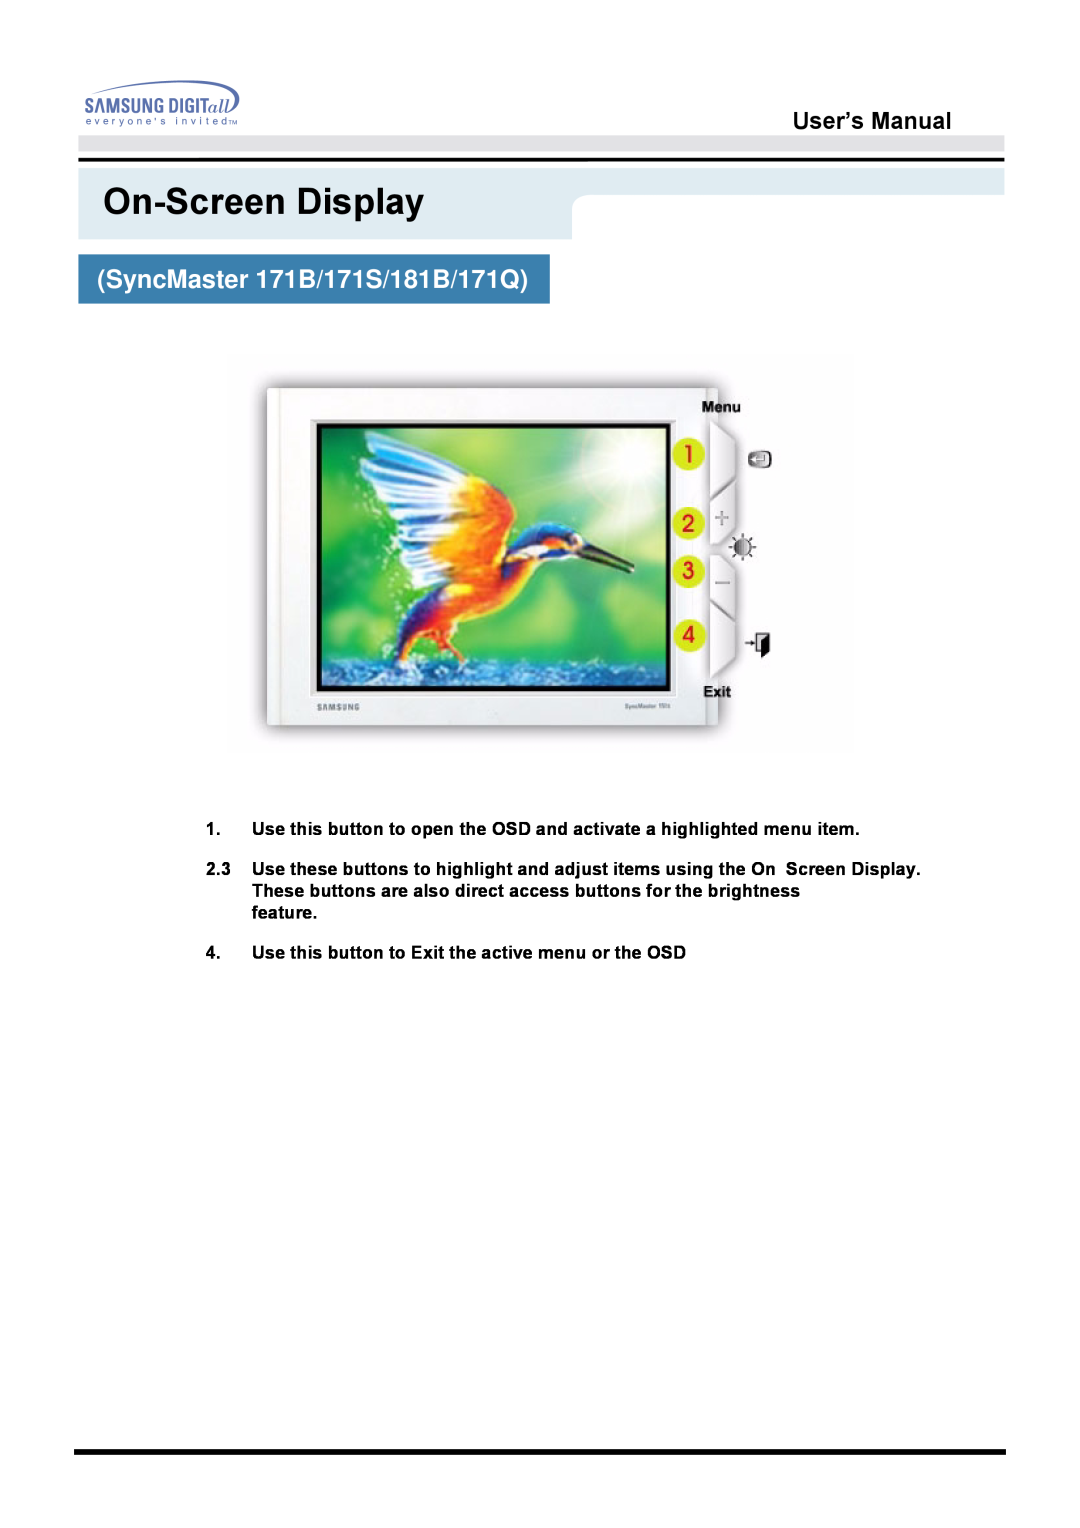 Samsung 171B, 171S, 181B, 171T, 171Q manual On-Screen Display, SyncMaster 171B/171S/181B/171Q, User’s Manual 